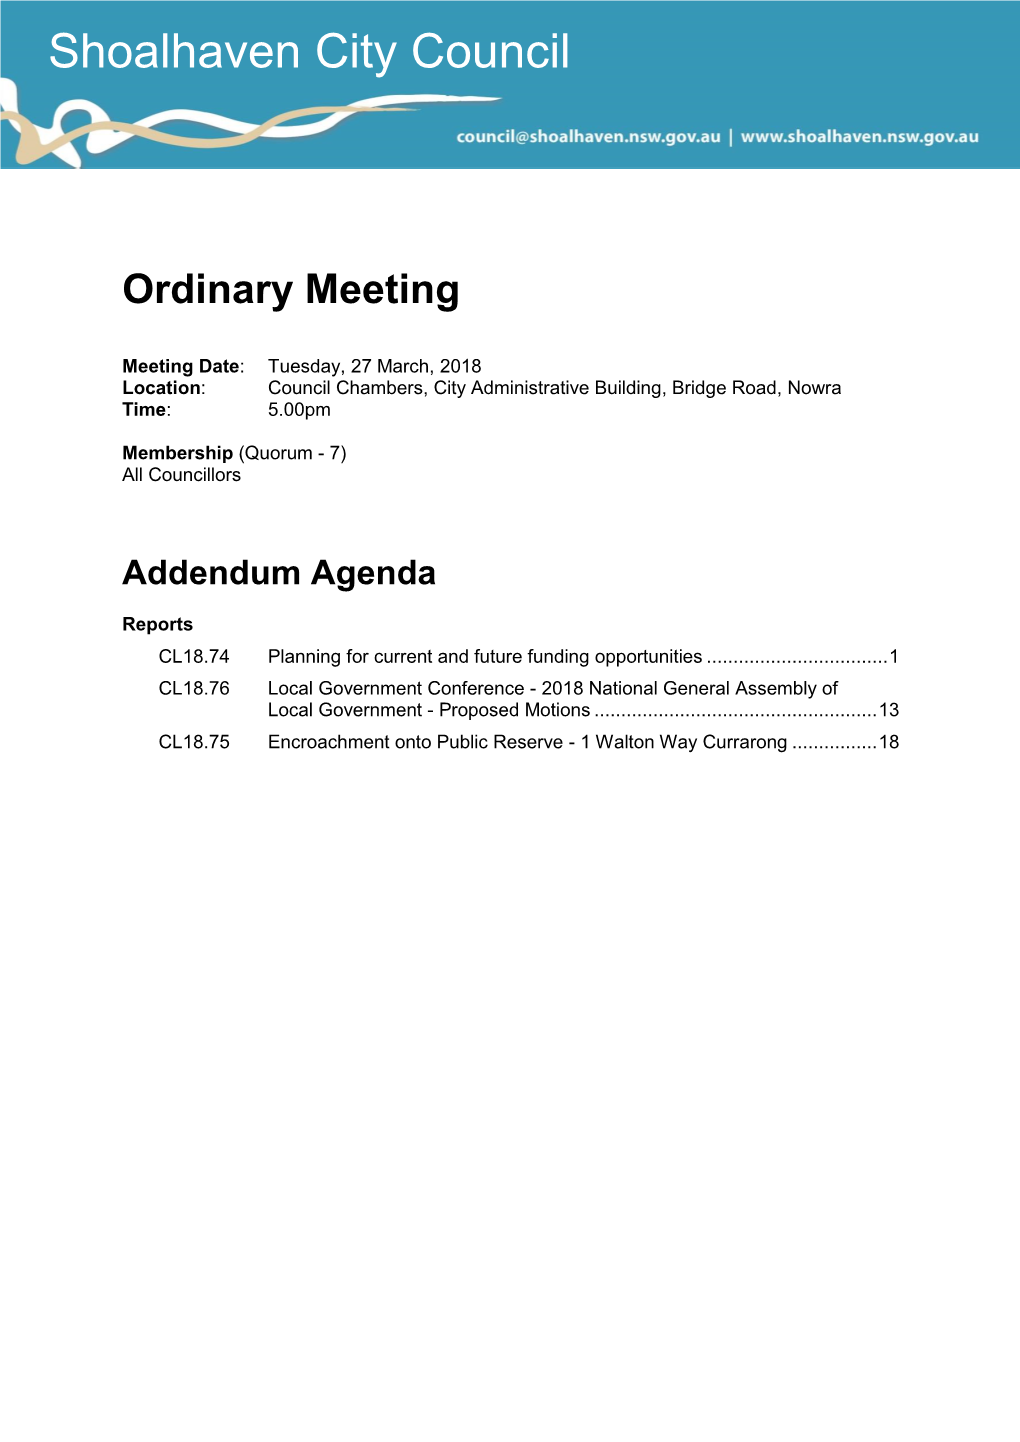 Addendum Agenda of Ordinary Meeting